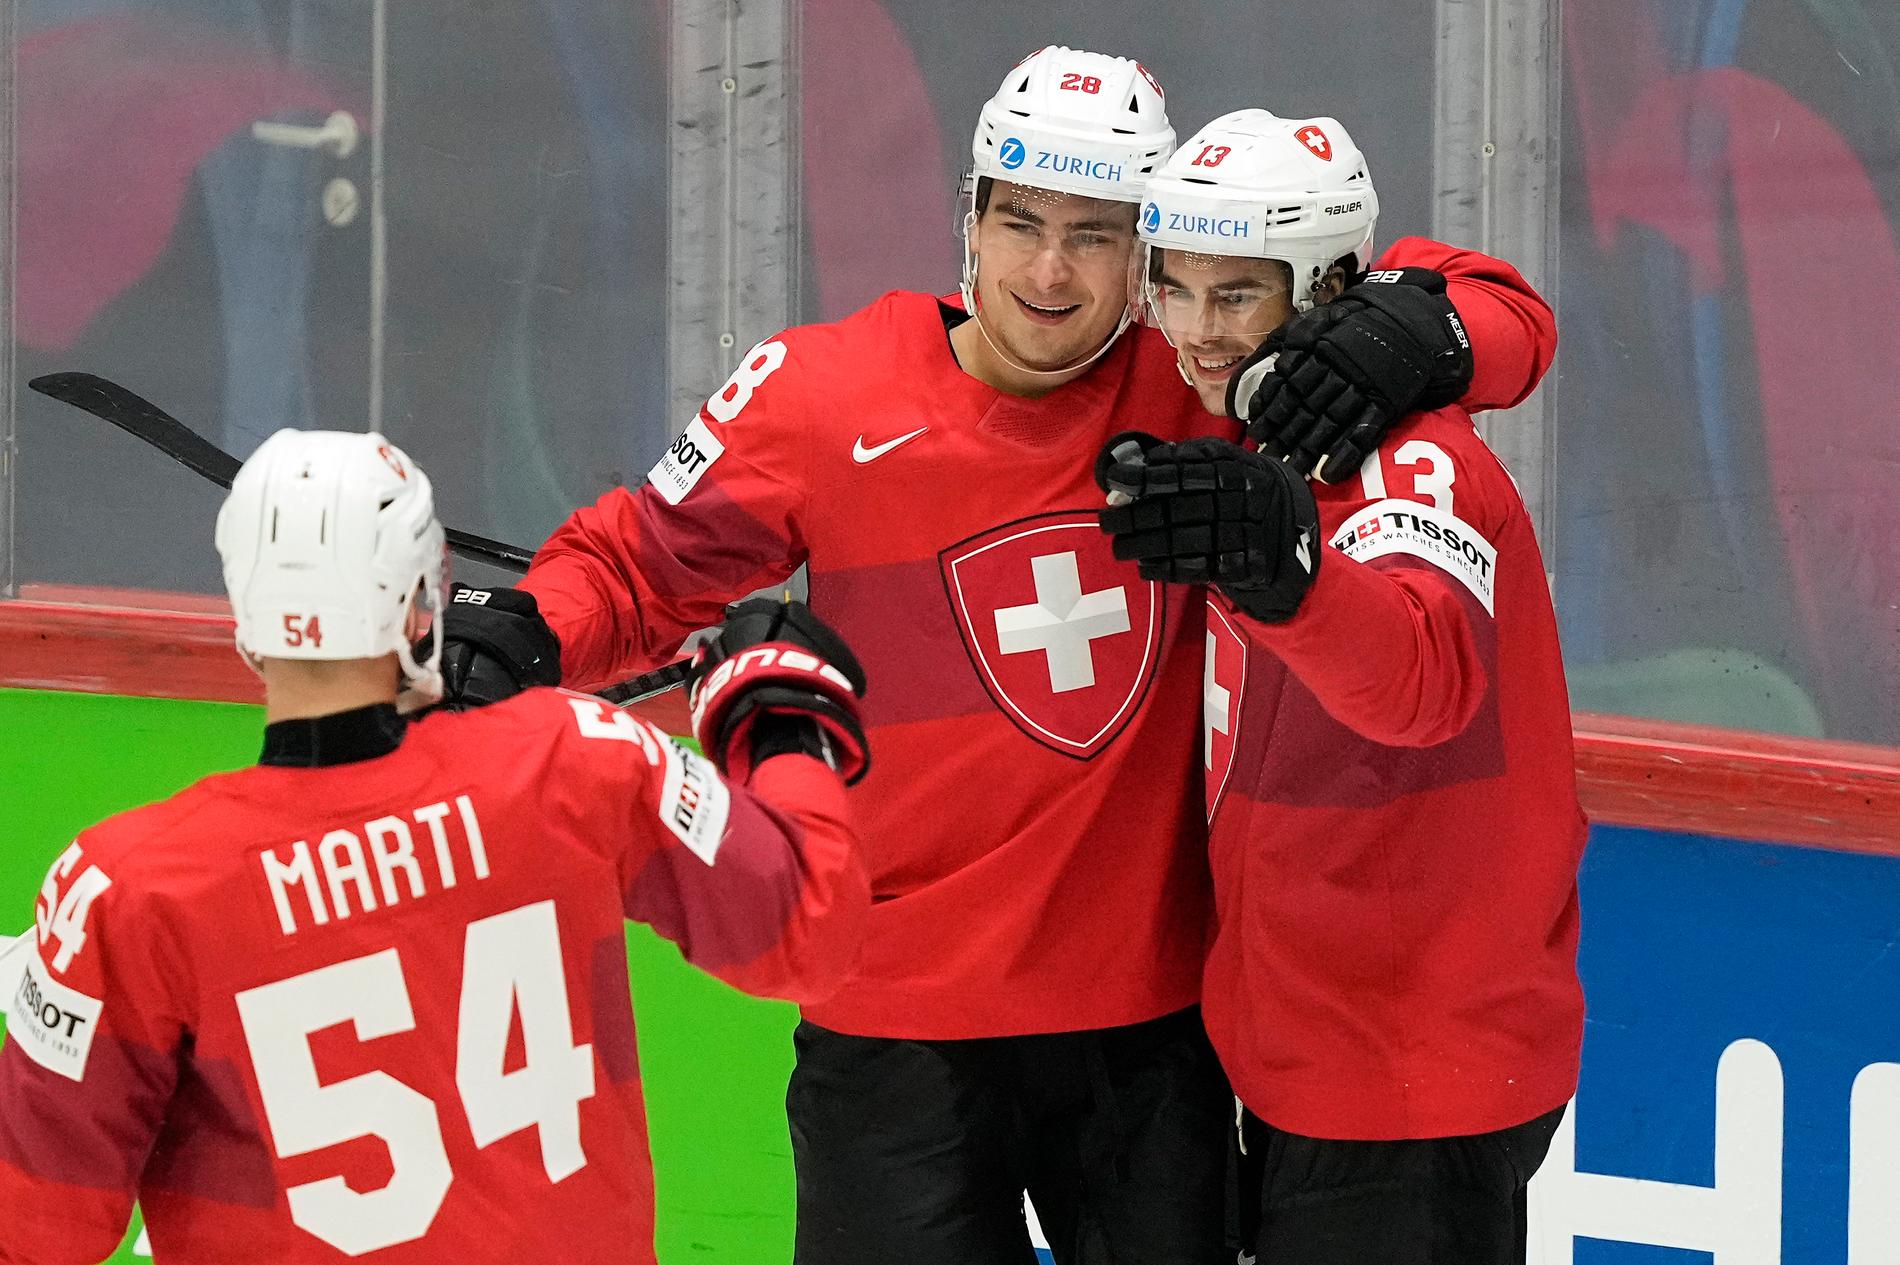 Schweiz har vunnit sina fyra inledande matcher i ishockey-VM.